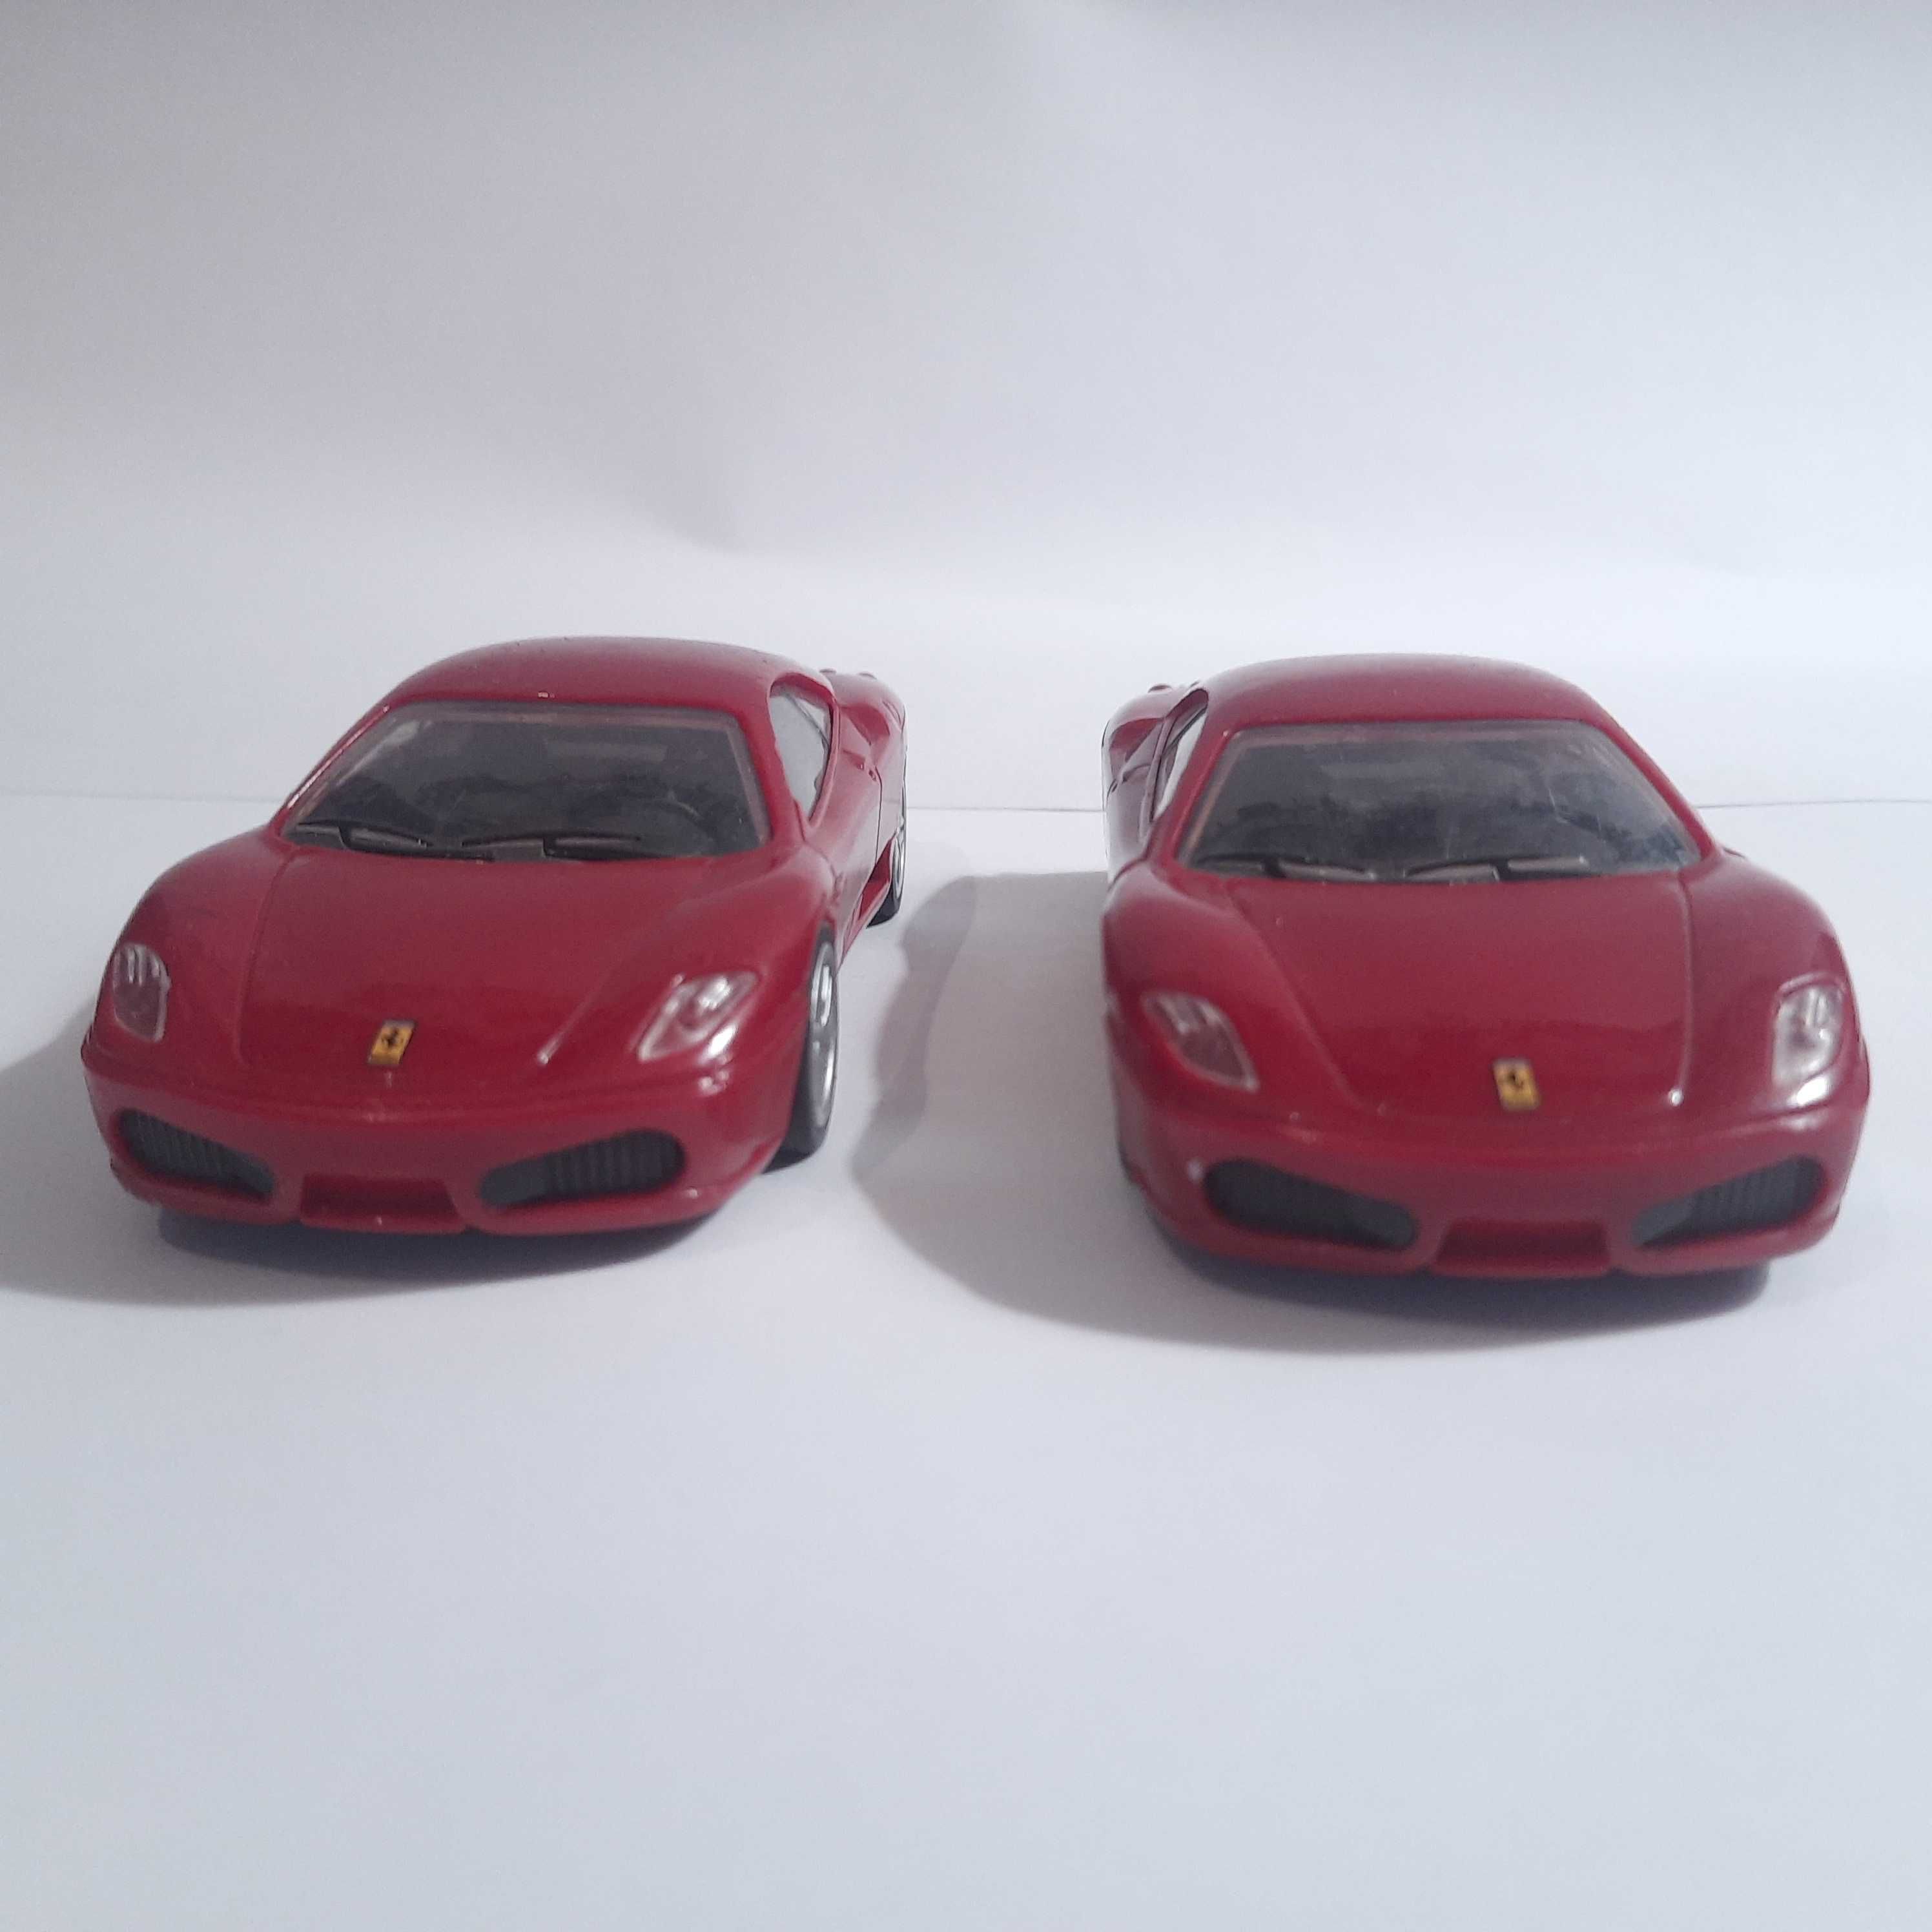 2x Hot Wheels Shell V-Power Ferrari F430 1:38